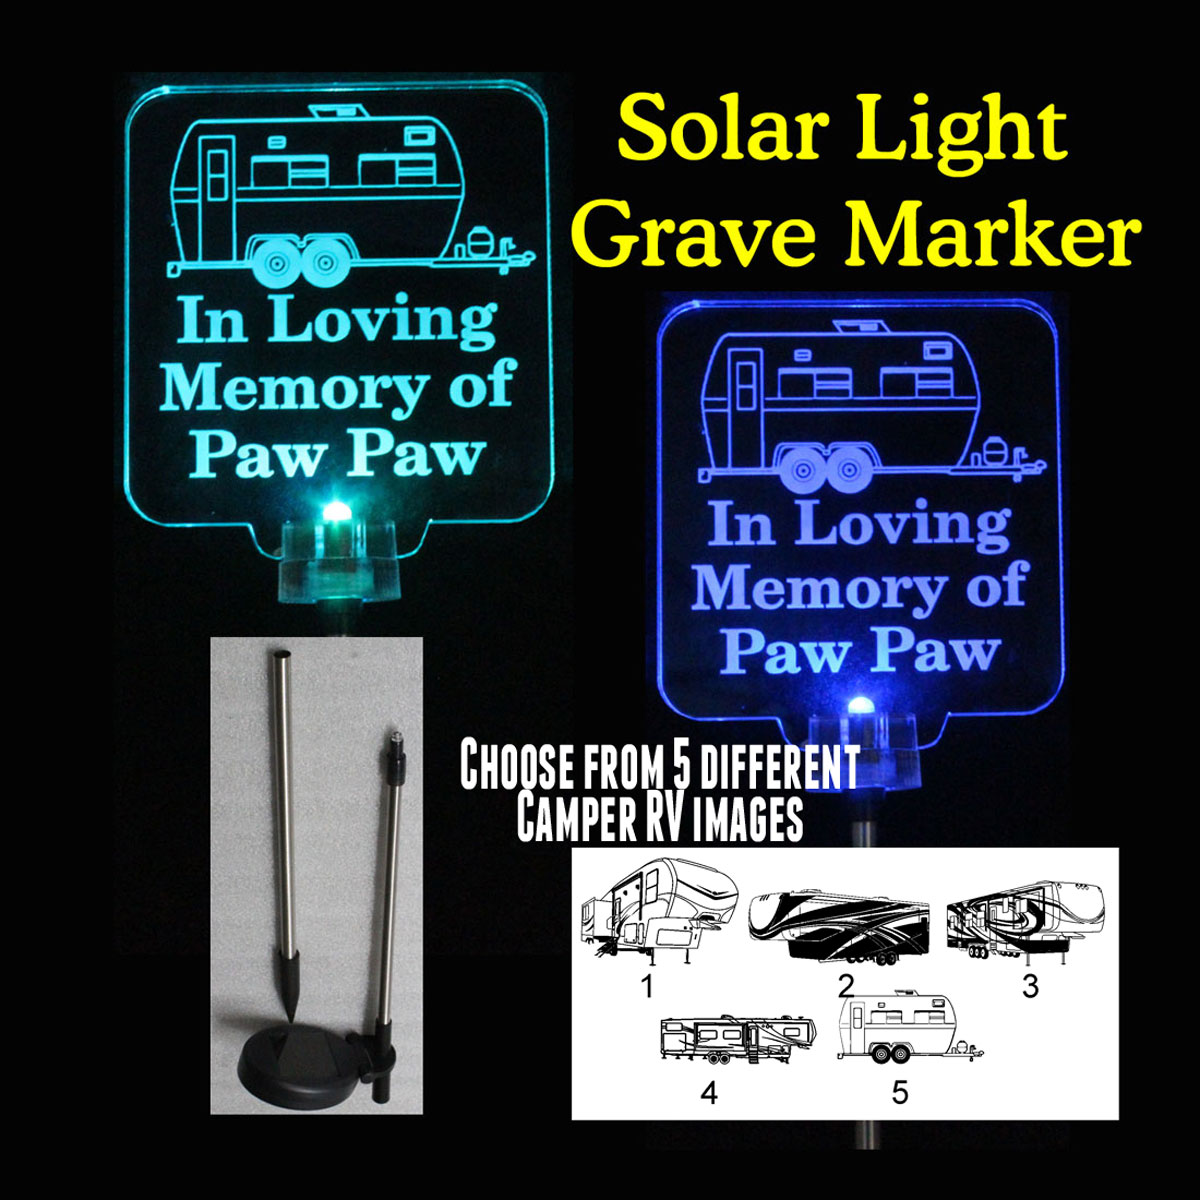 Camper RV Cemetary marker solar light grave marker, memorial plaque,  personalized